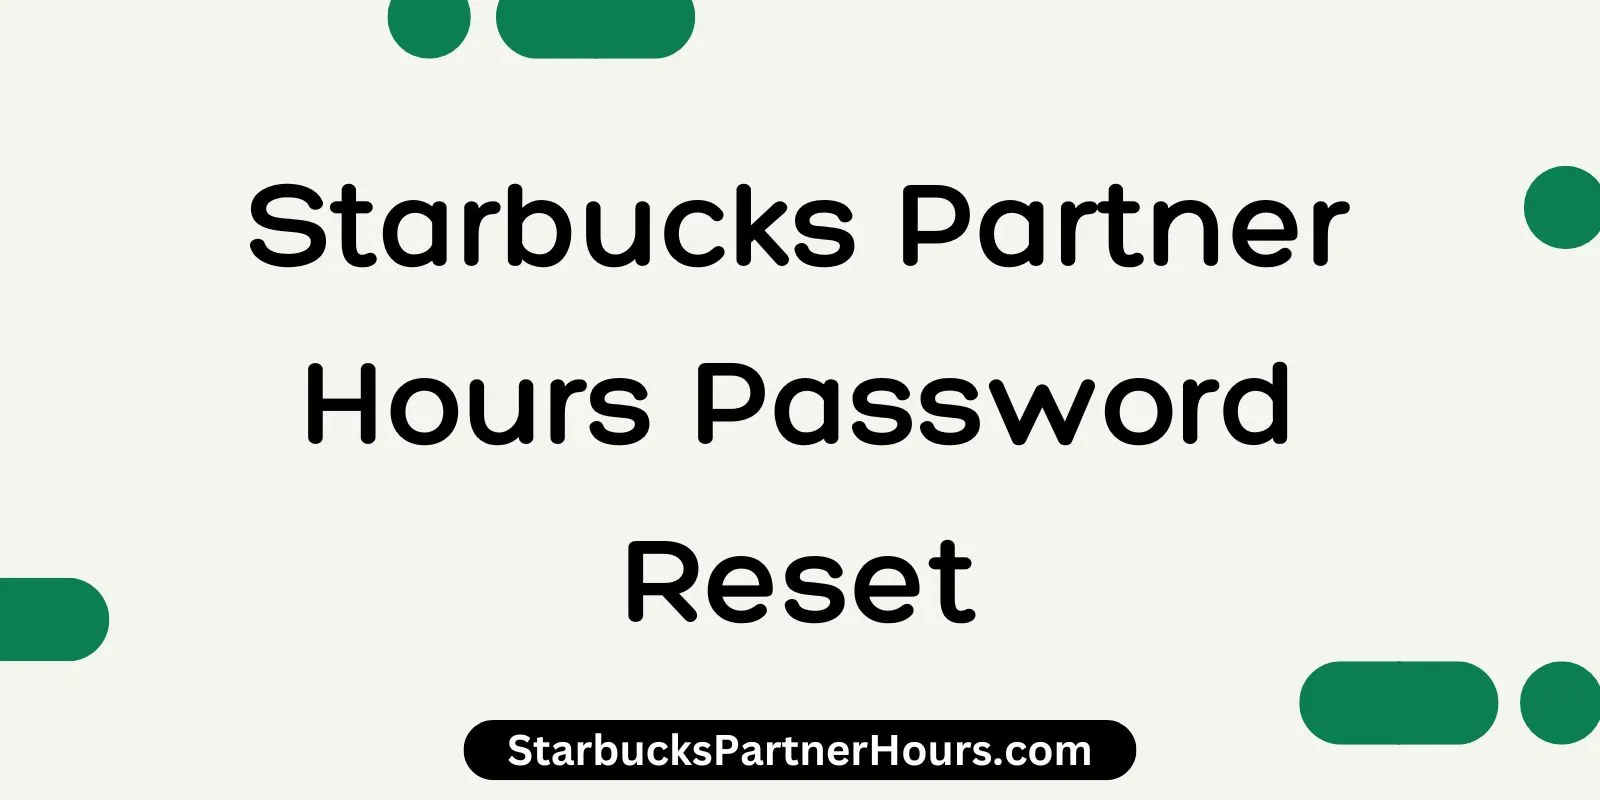 Starbucks Partner Hours Password Reset